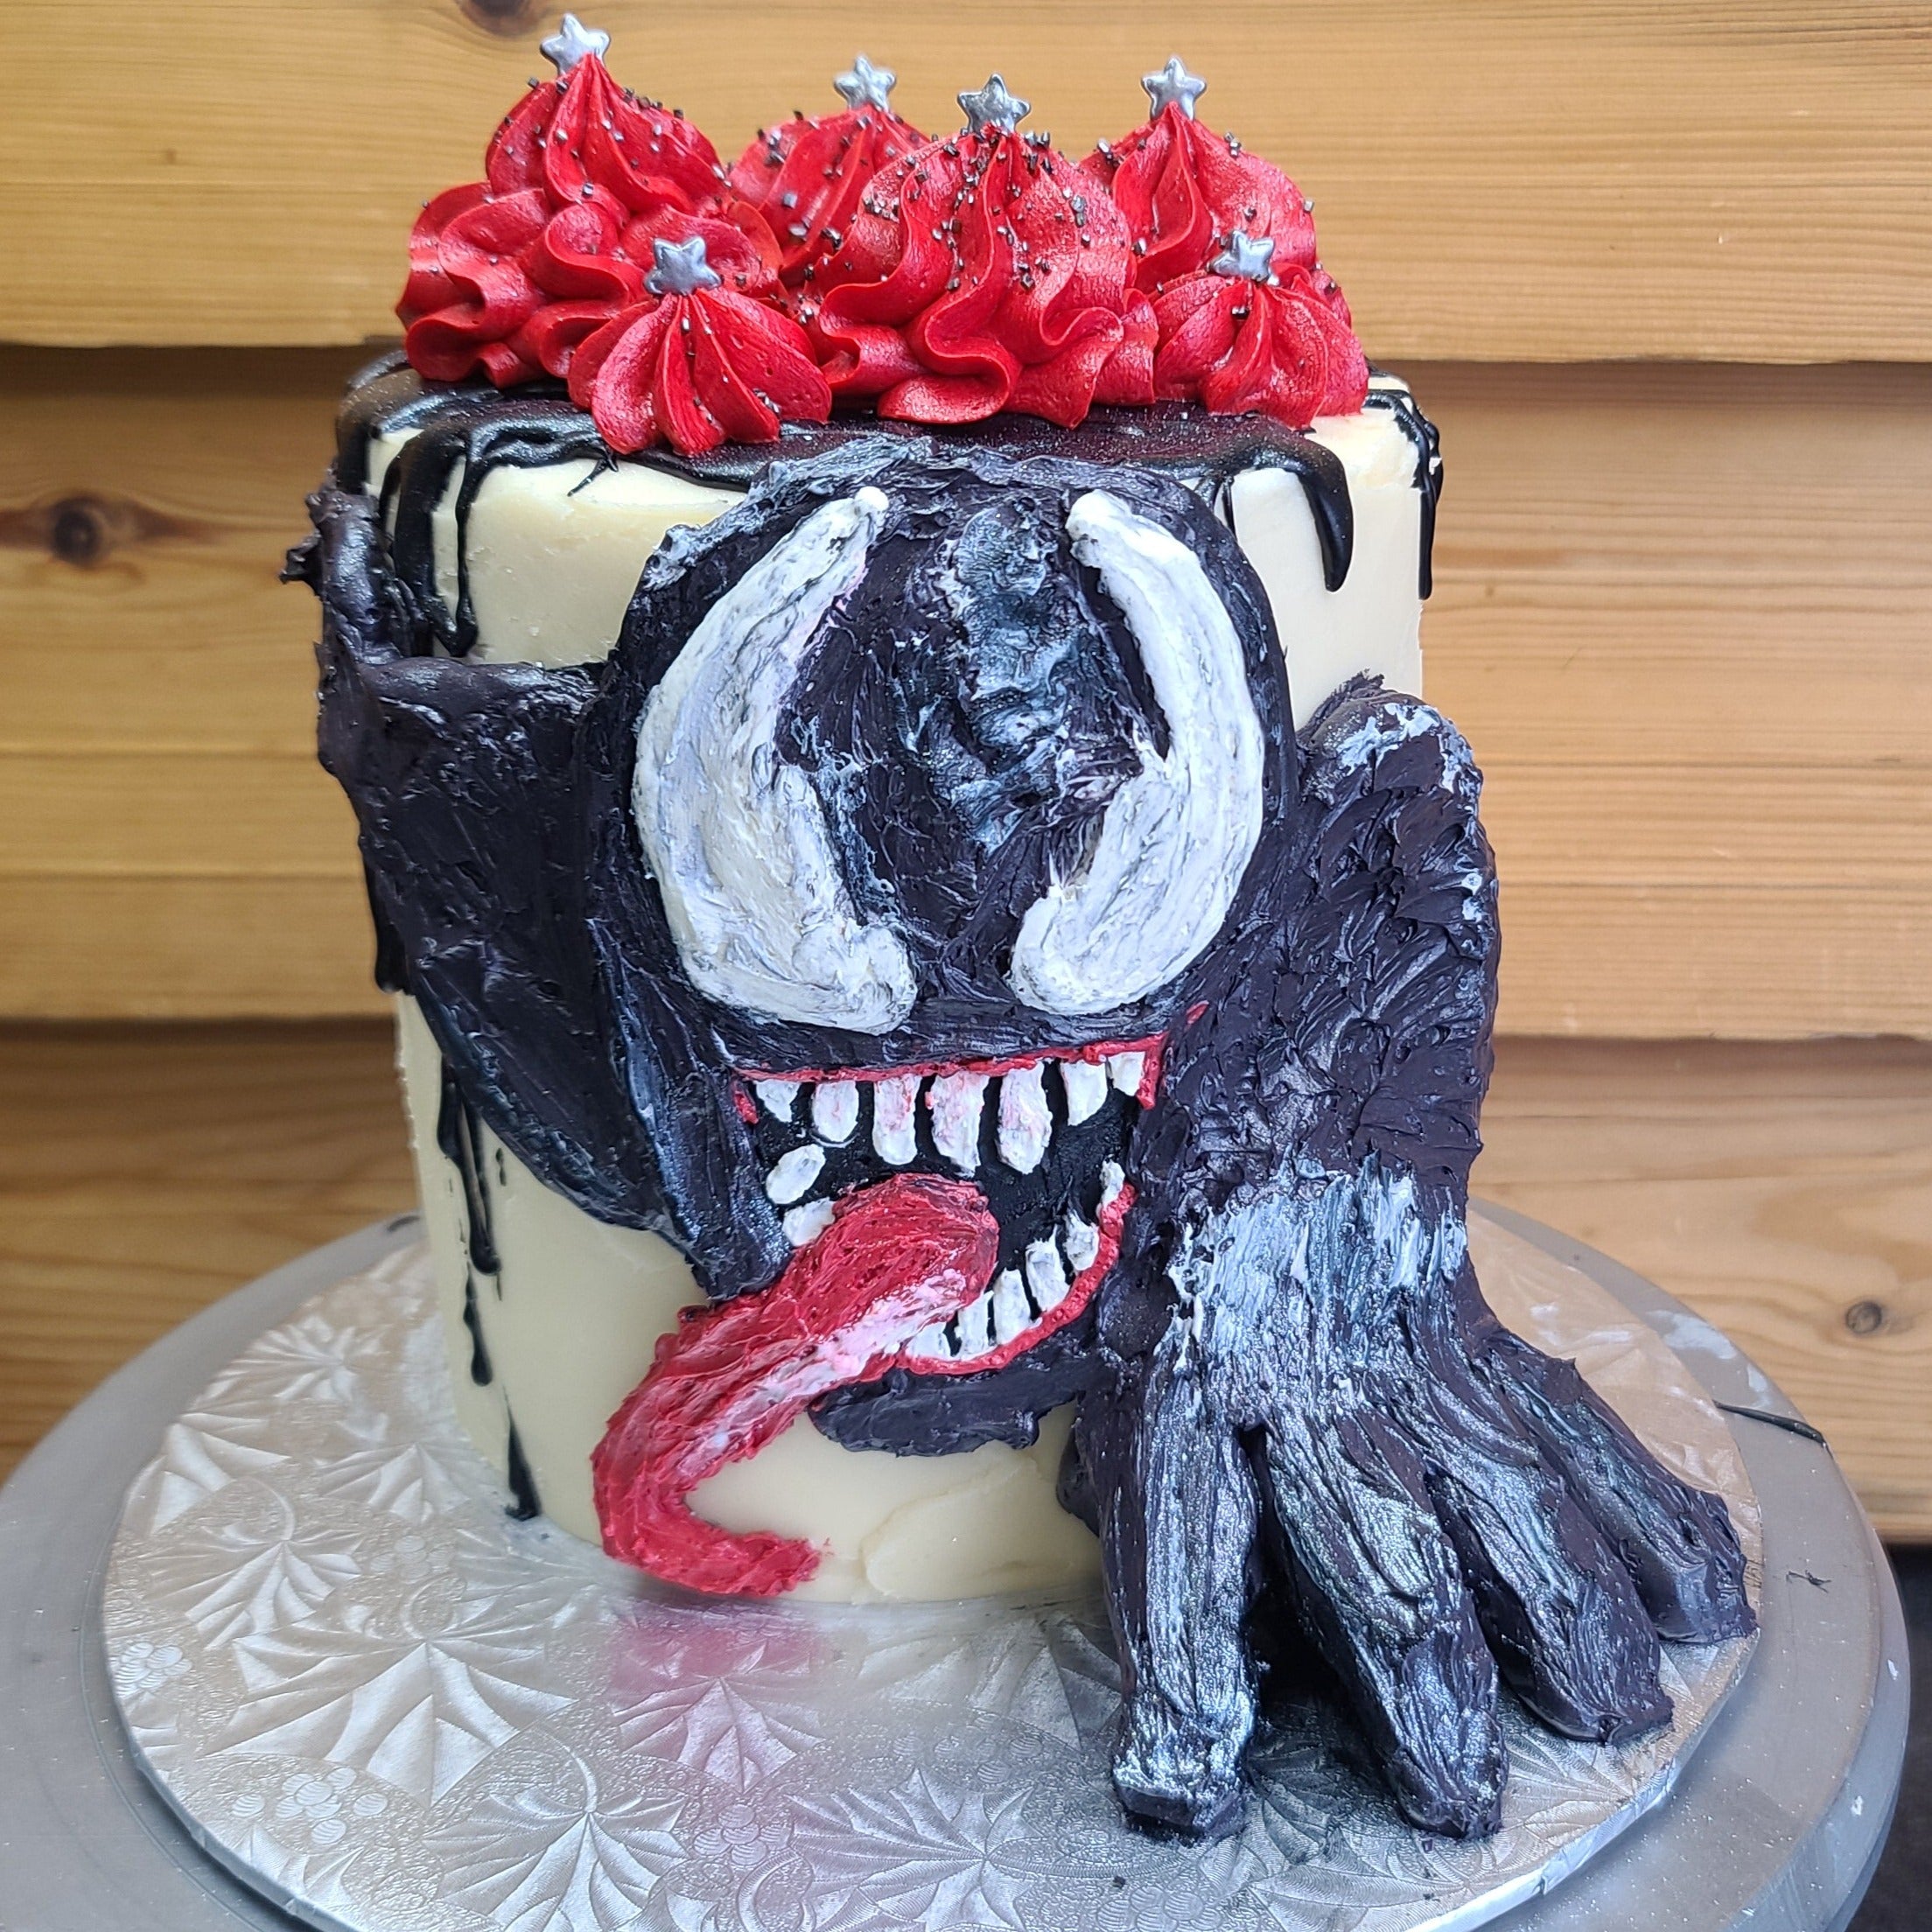 The Bake Delights. Chocolate Venom Cake